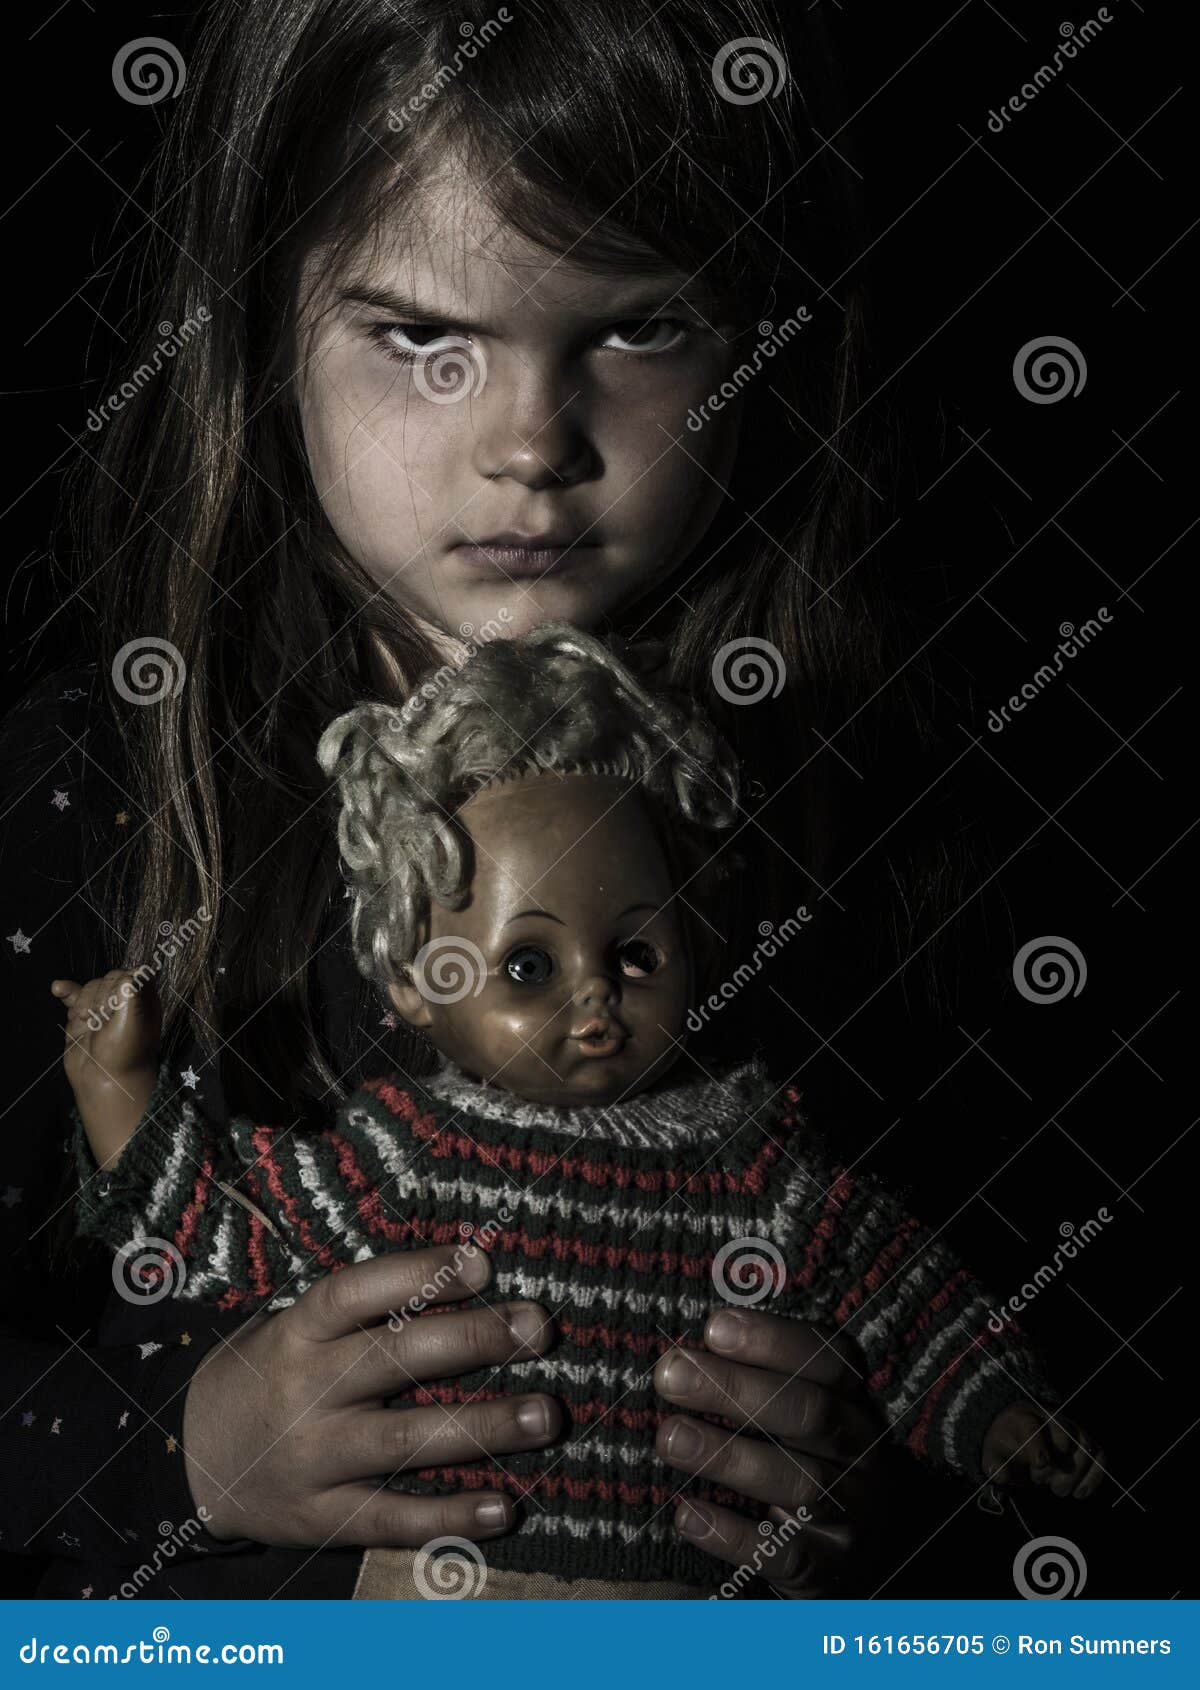 creepy girl doll